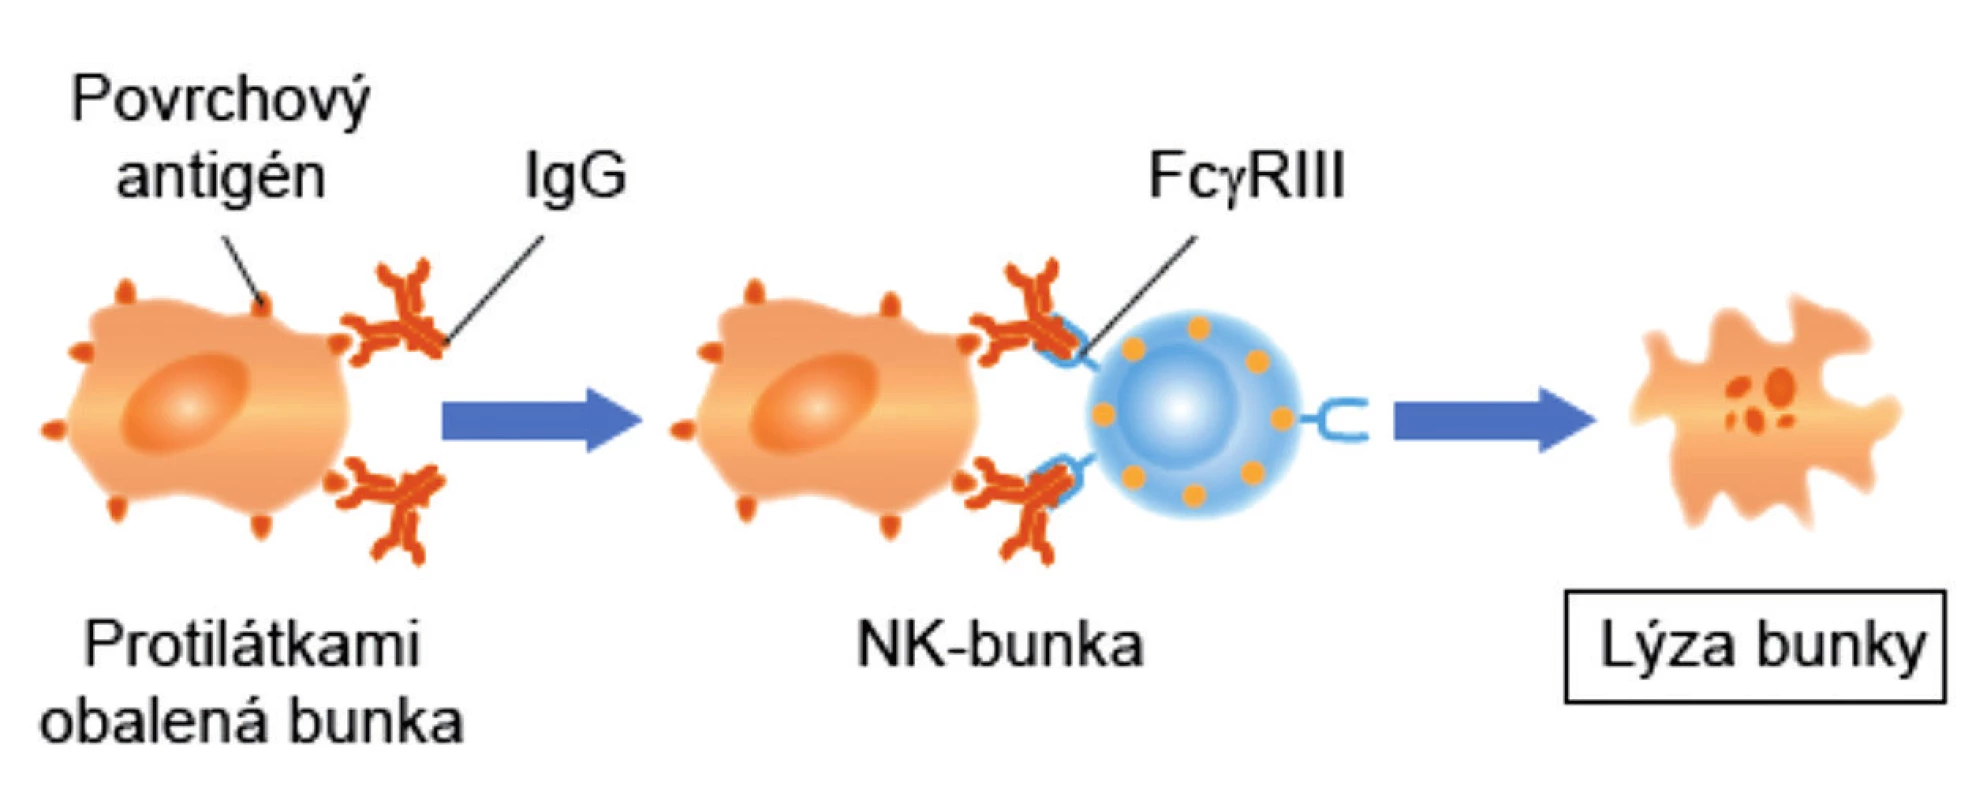 Cytotoxicita sprostredkovaná bunkami závislá od
protilátky (ADCC)<br>
Figure 2. Antibody-dependent cell-mediated cytotoxicity (ADCC)